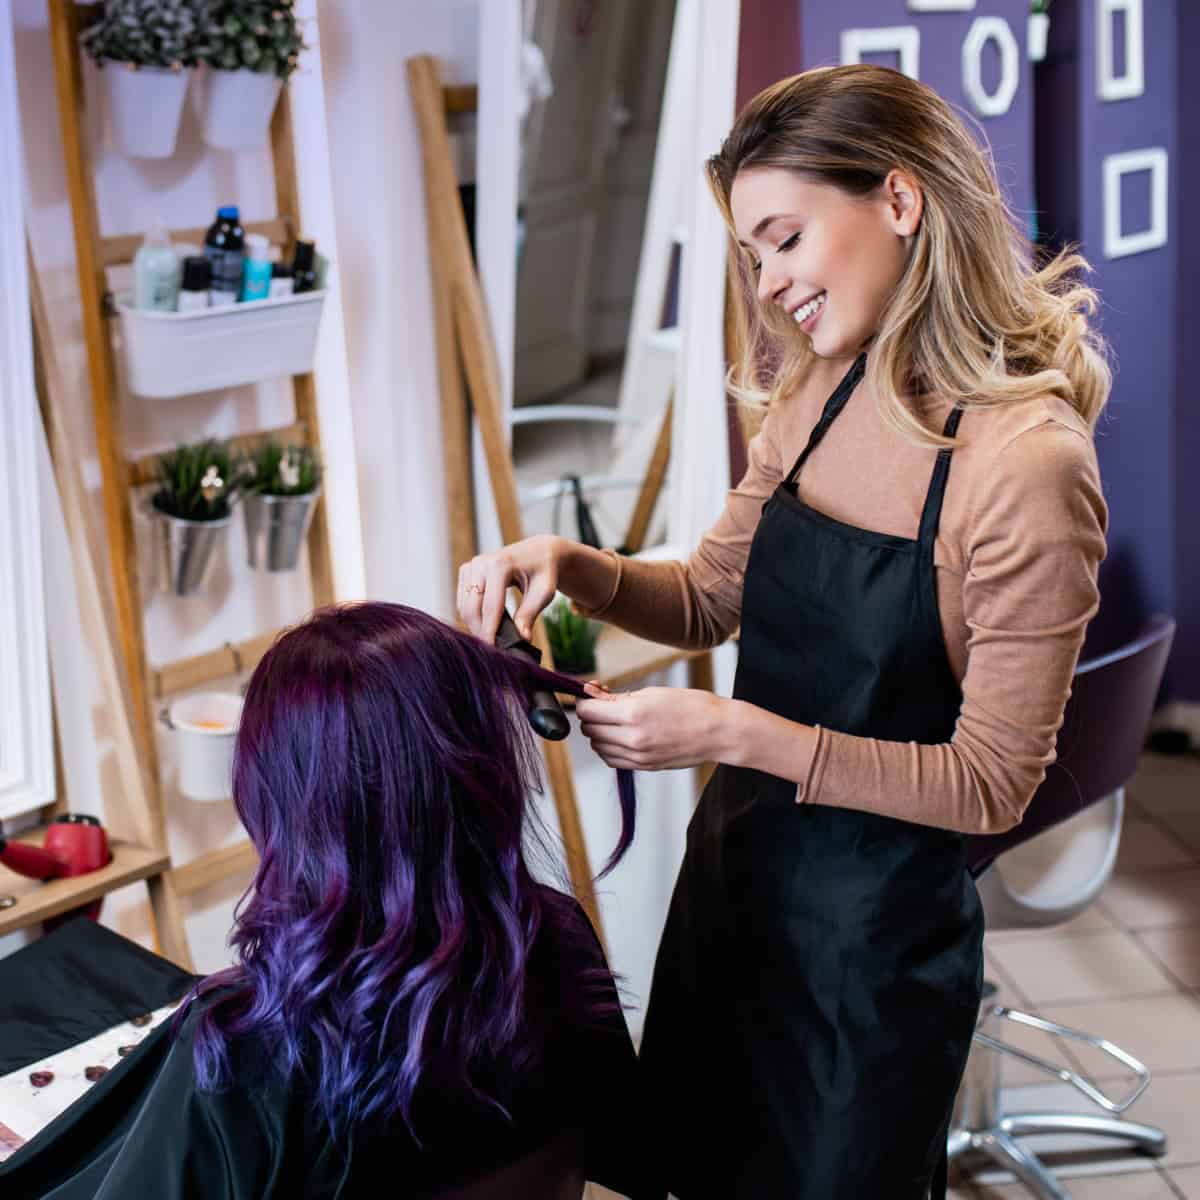 Hair stylist cutting hair on client